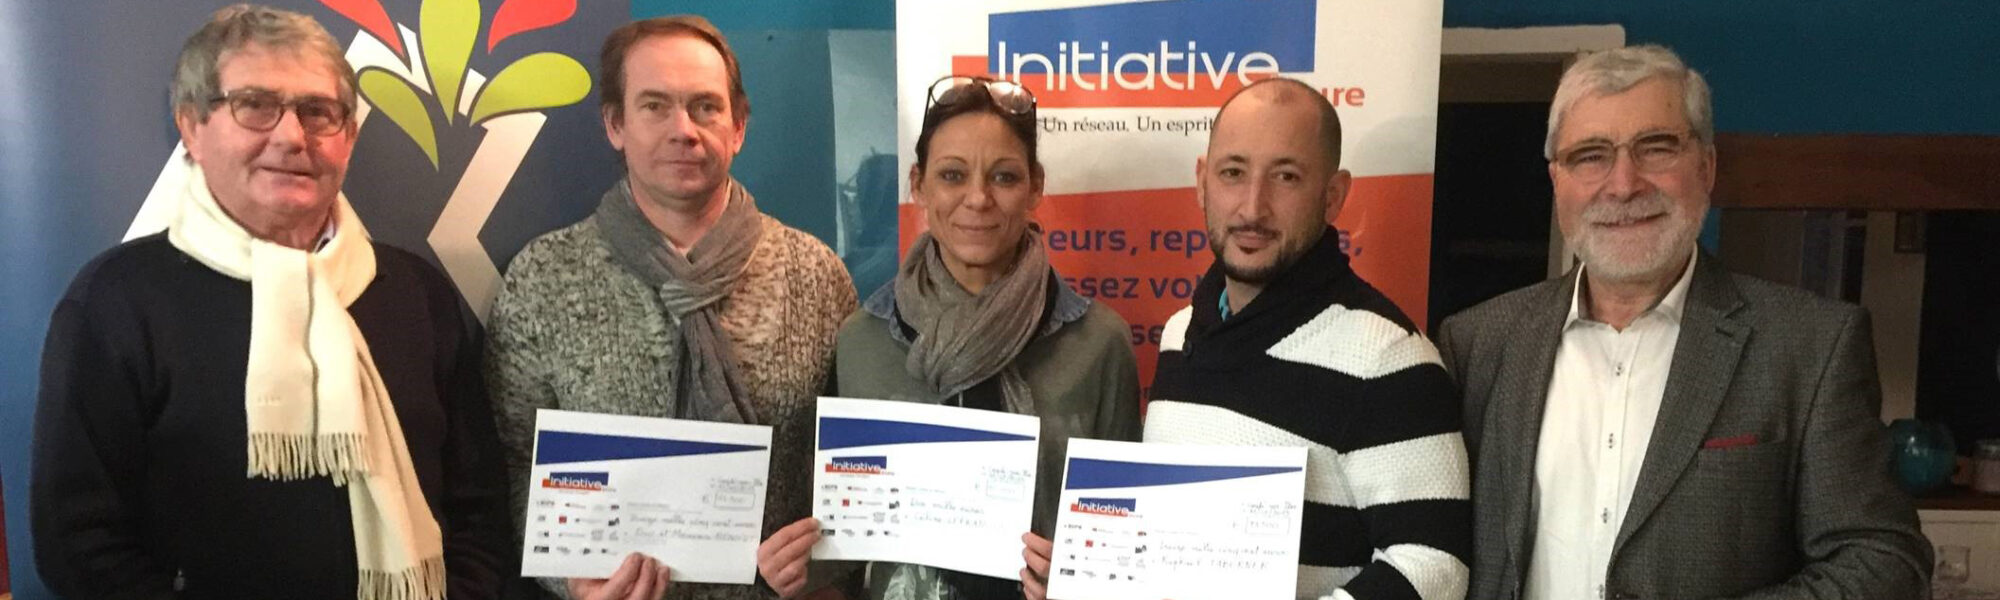 2019.02.11-3 repreneurs honorés-initiative-eure-bandeau